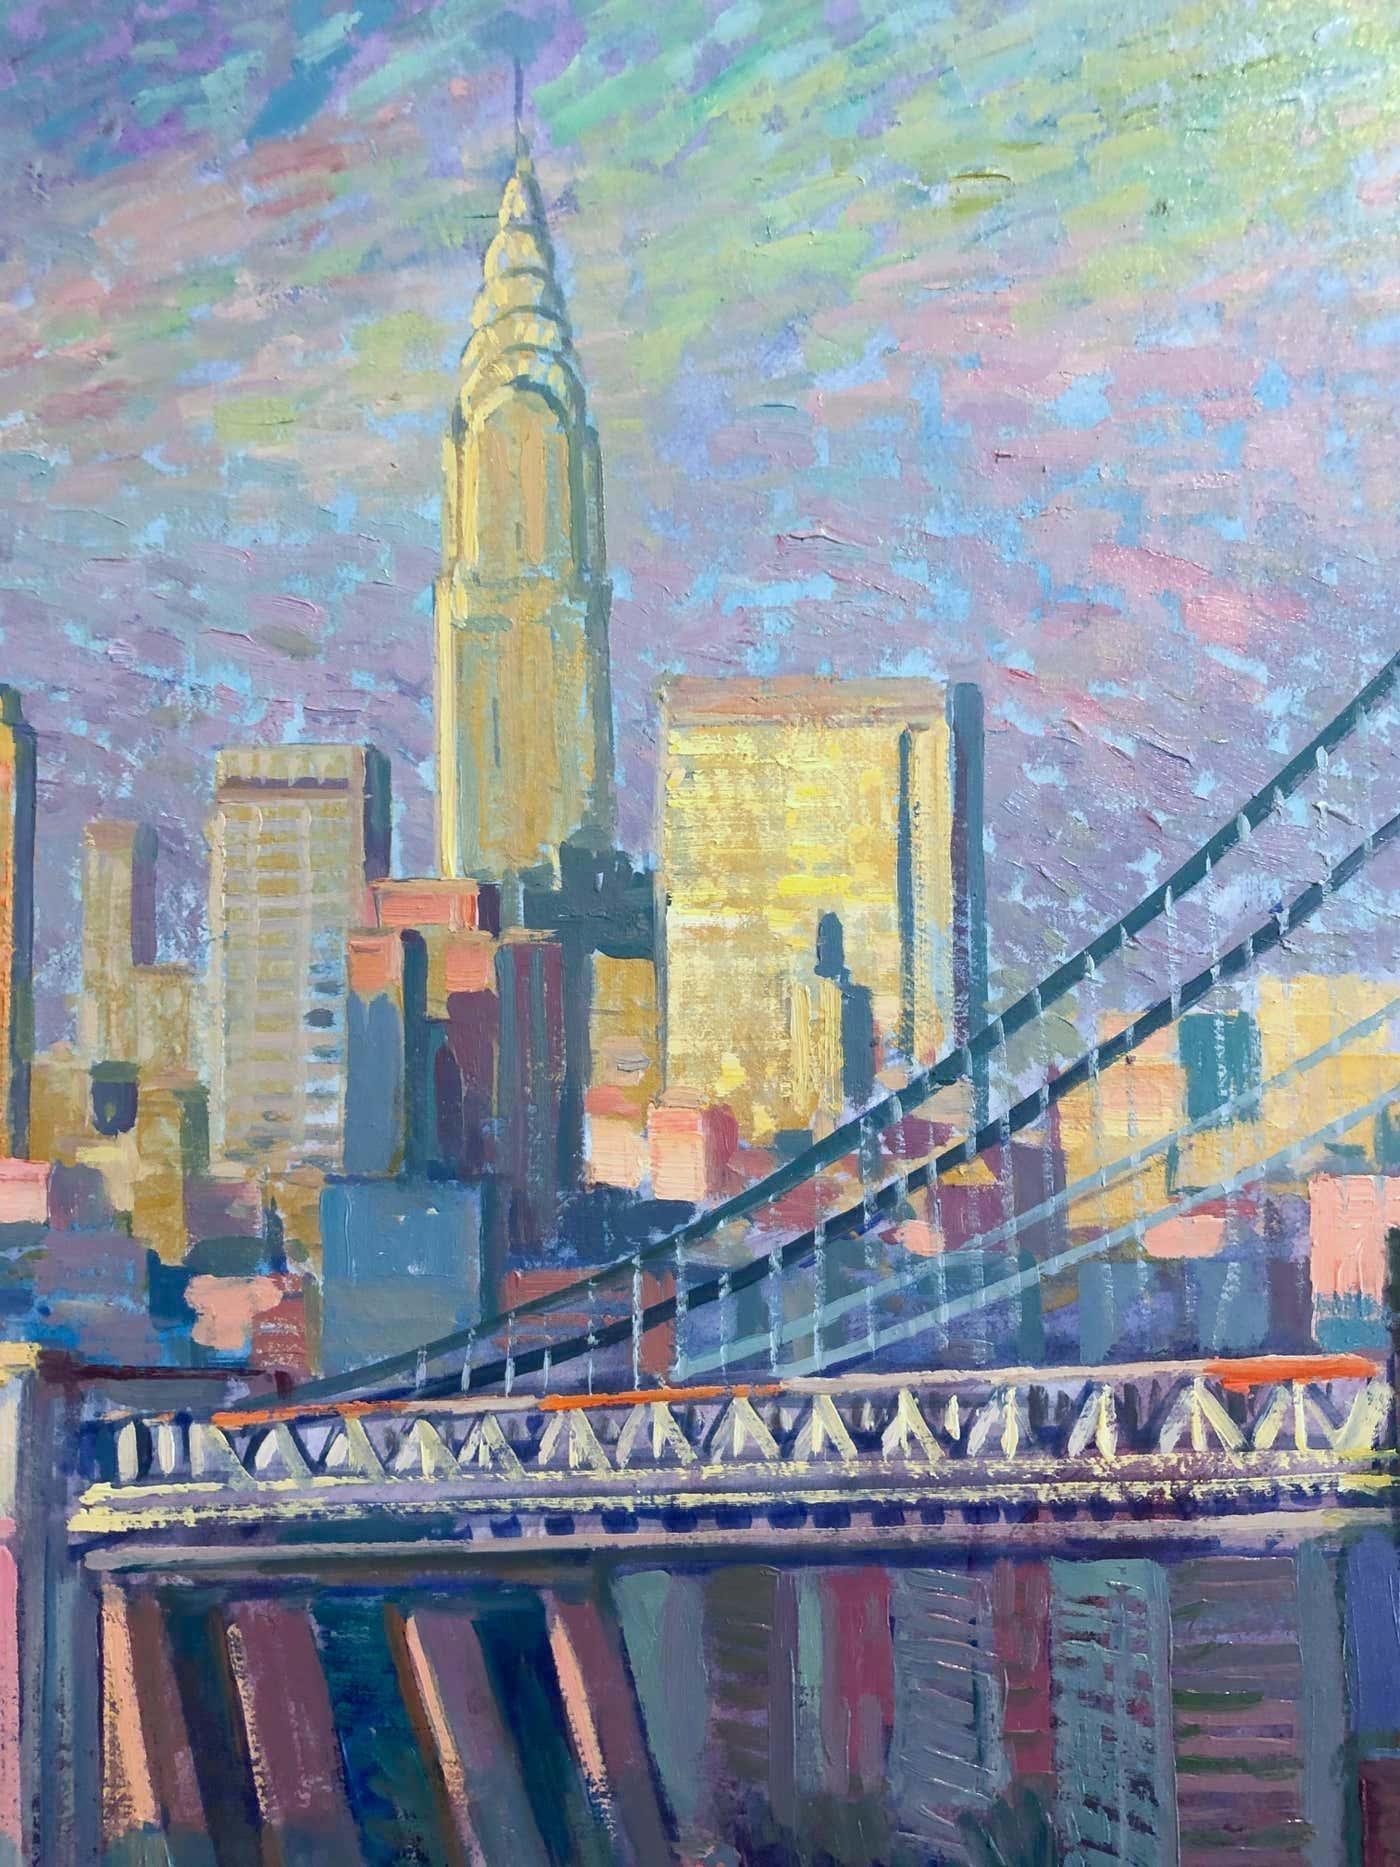 Manhattan Bridge, NYC-original impressionism cityscape painting-contemporary Art - Impressionist Painting by Juan del Pozo